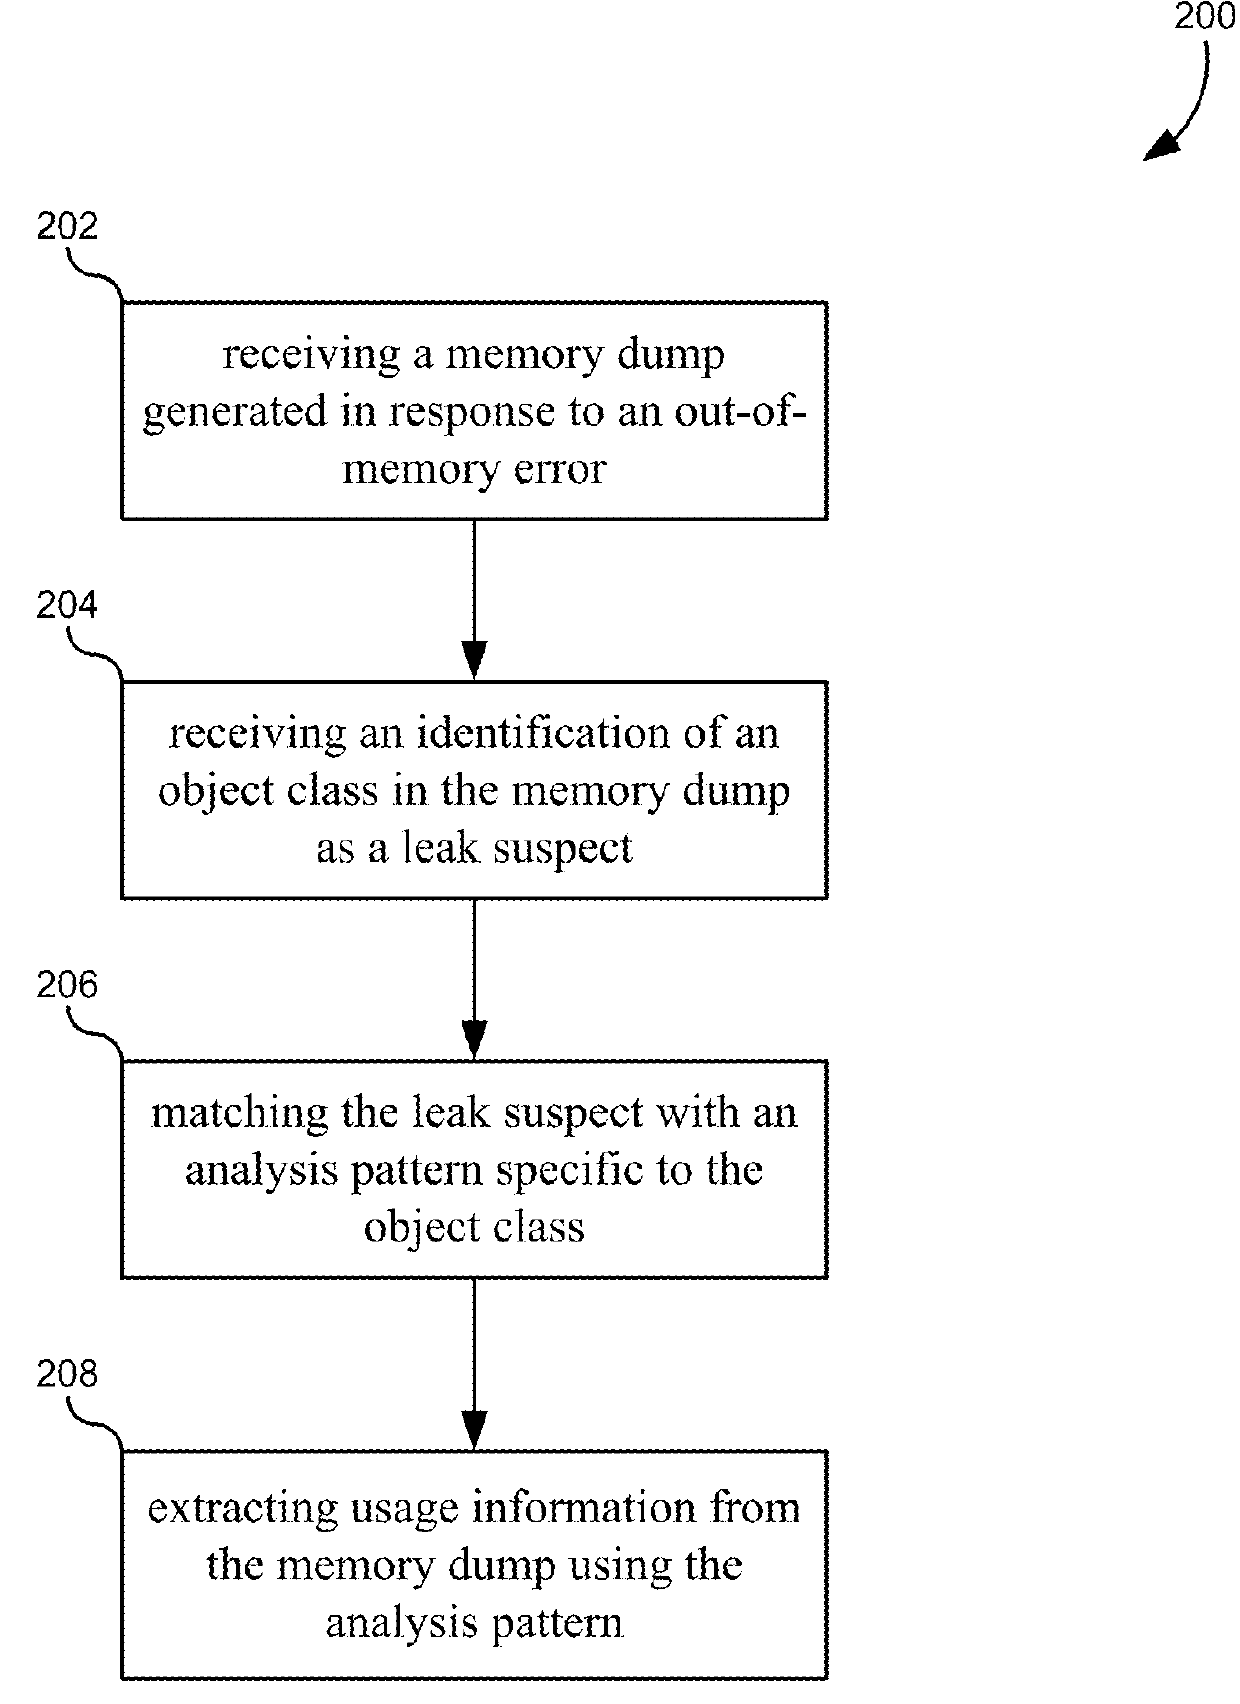 Pattern analysis for triaging memory leaks